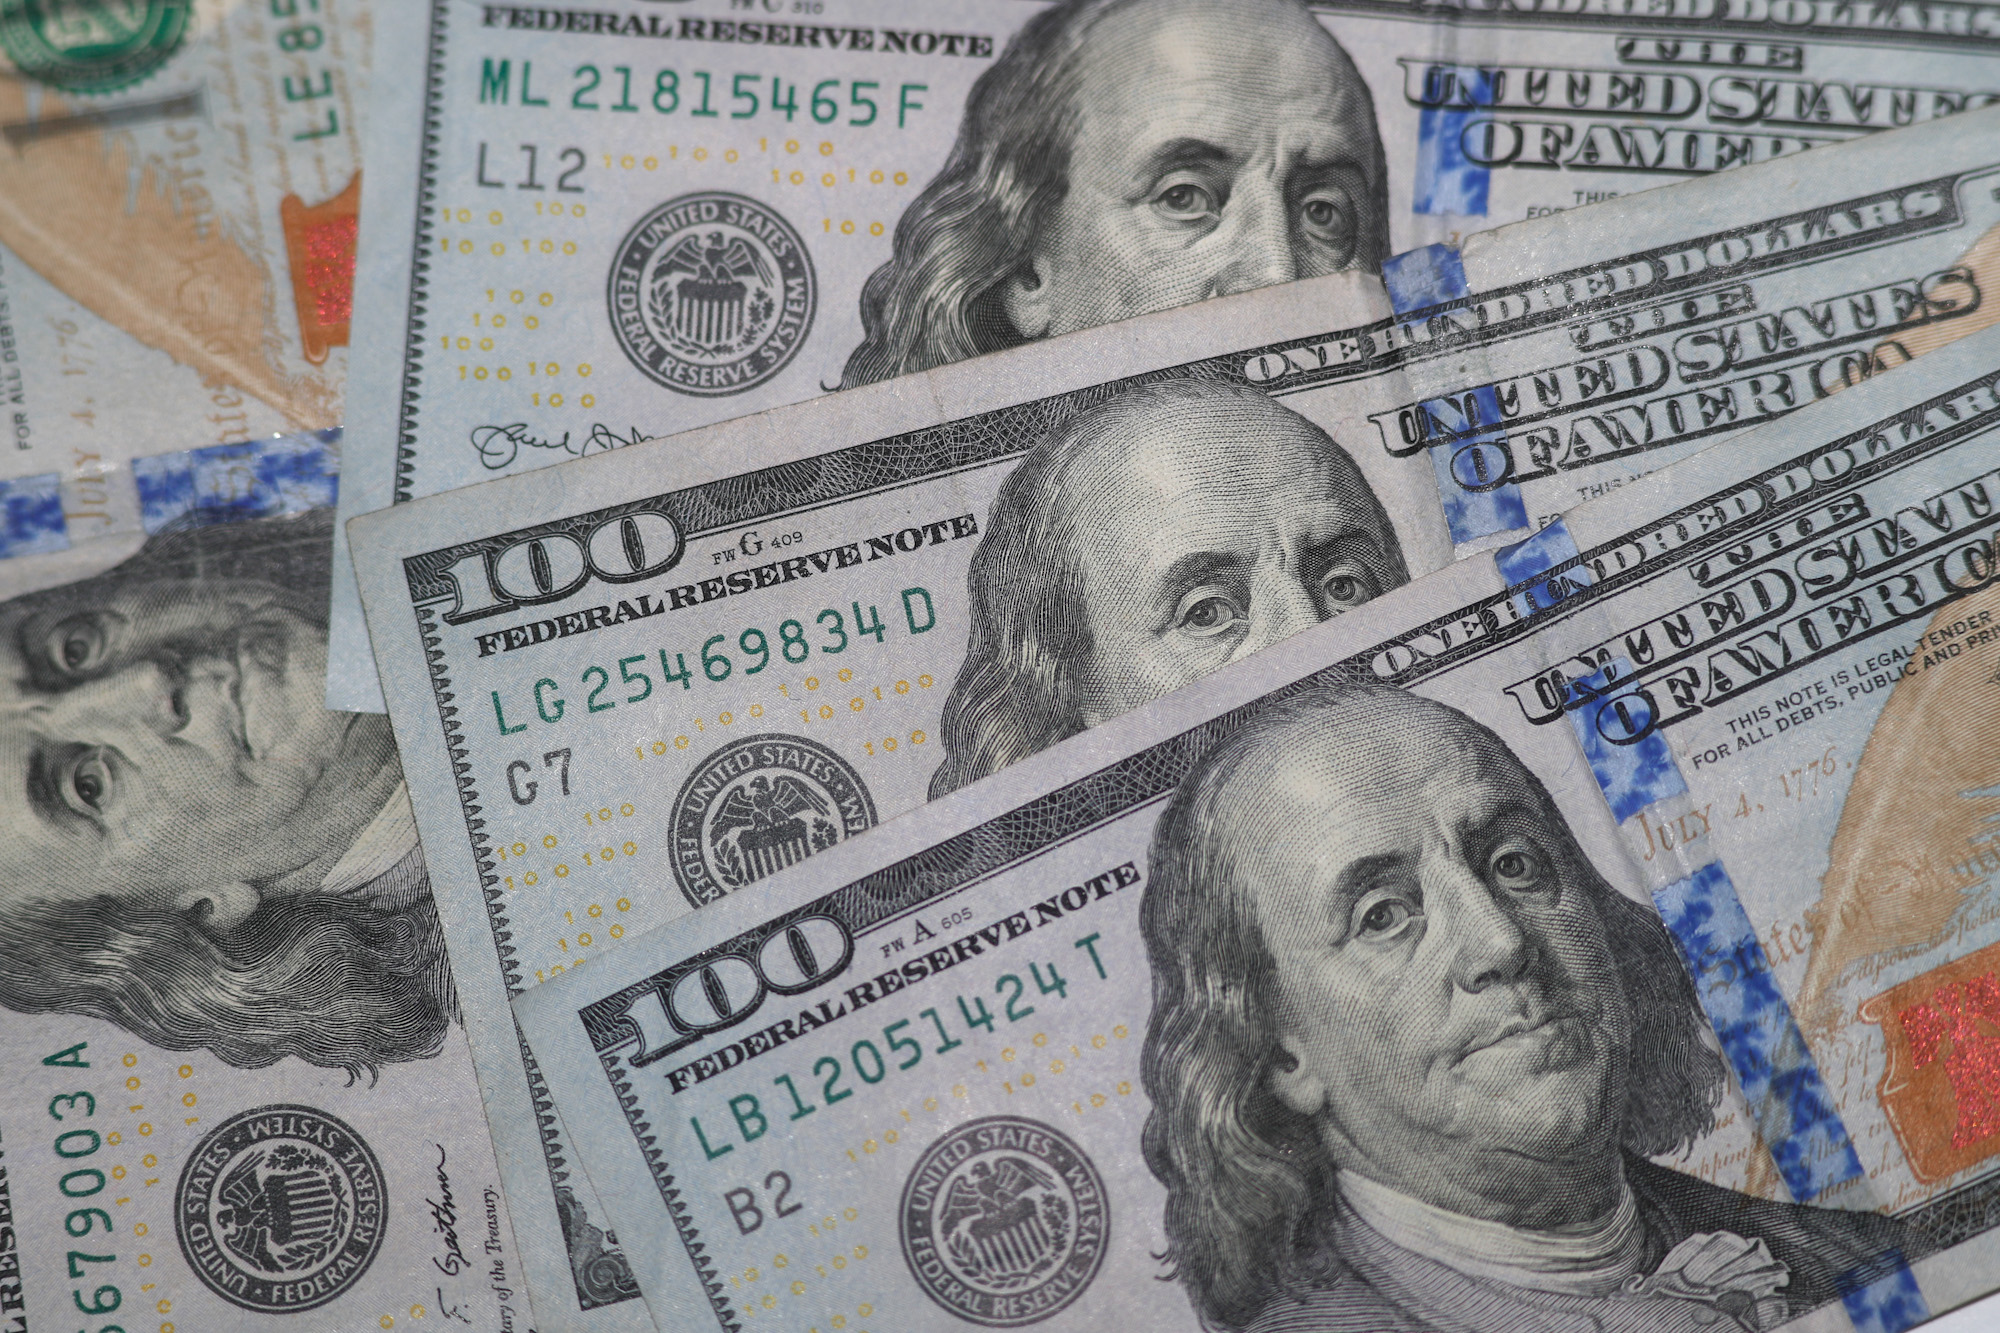 The likeness of Benjamin Franklin shown from $100 bills